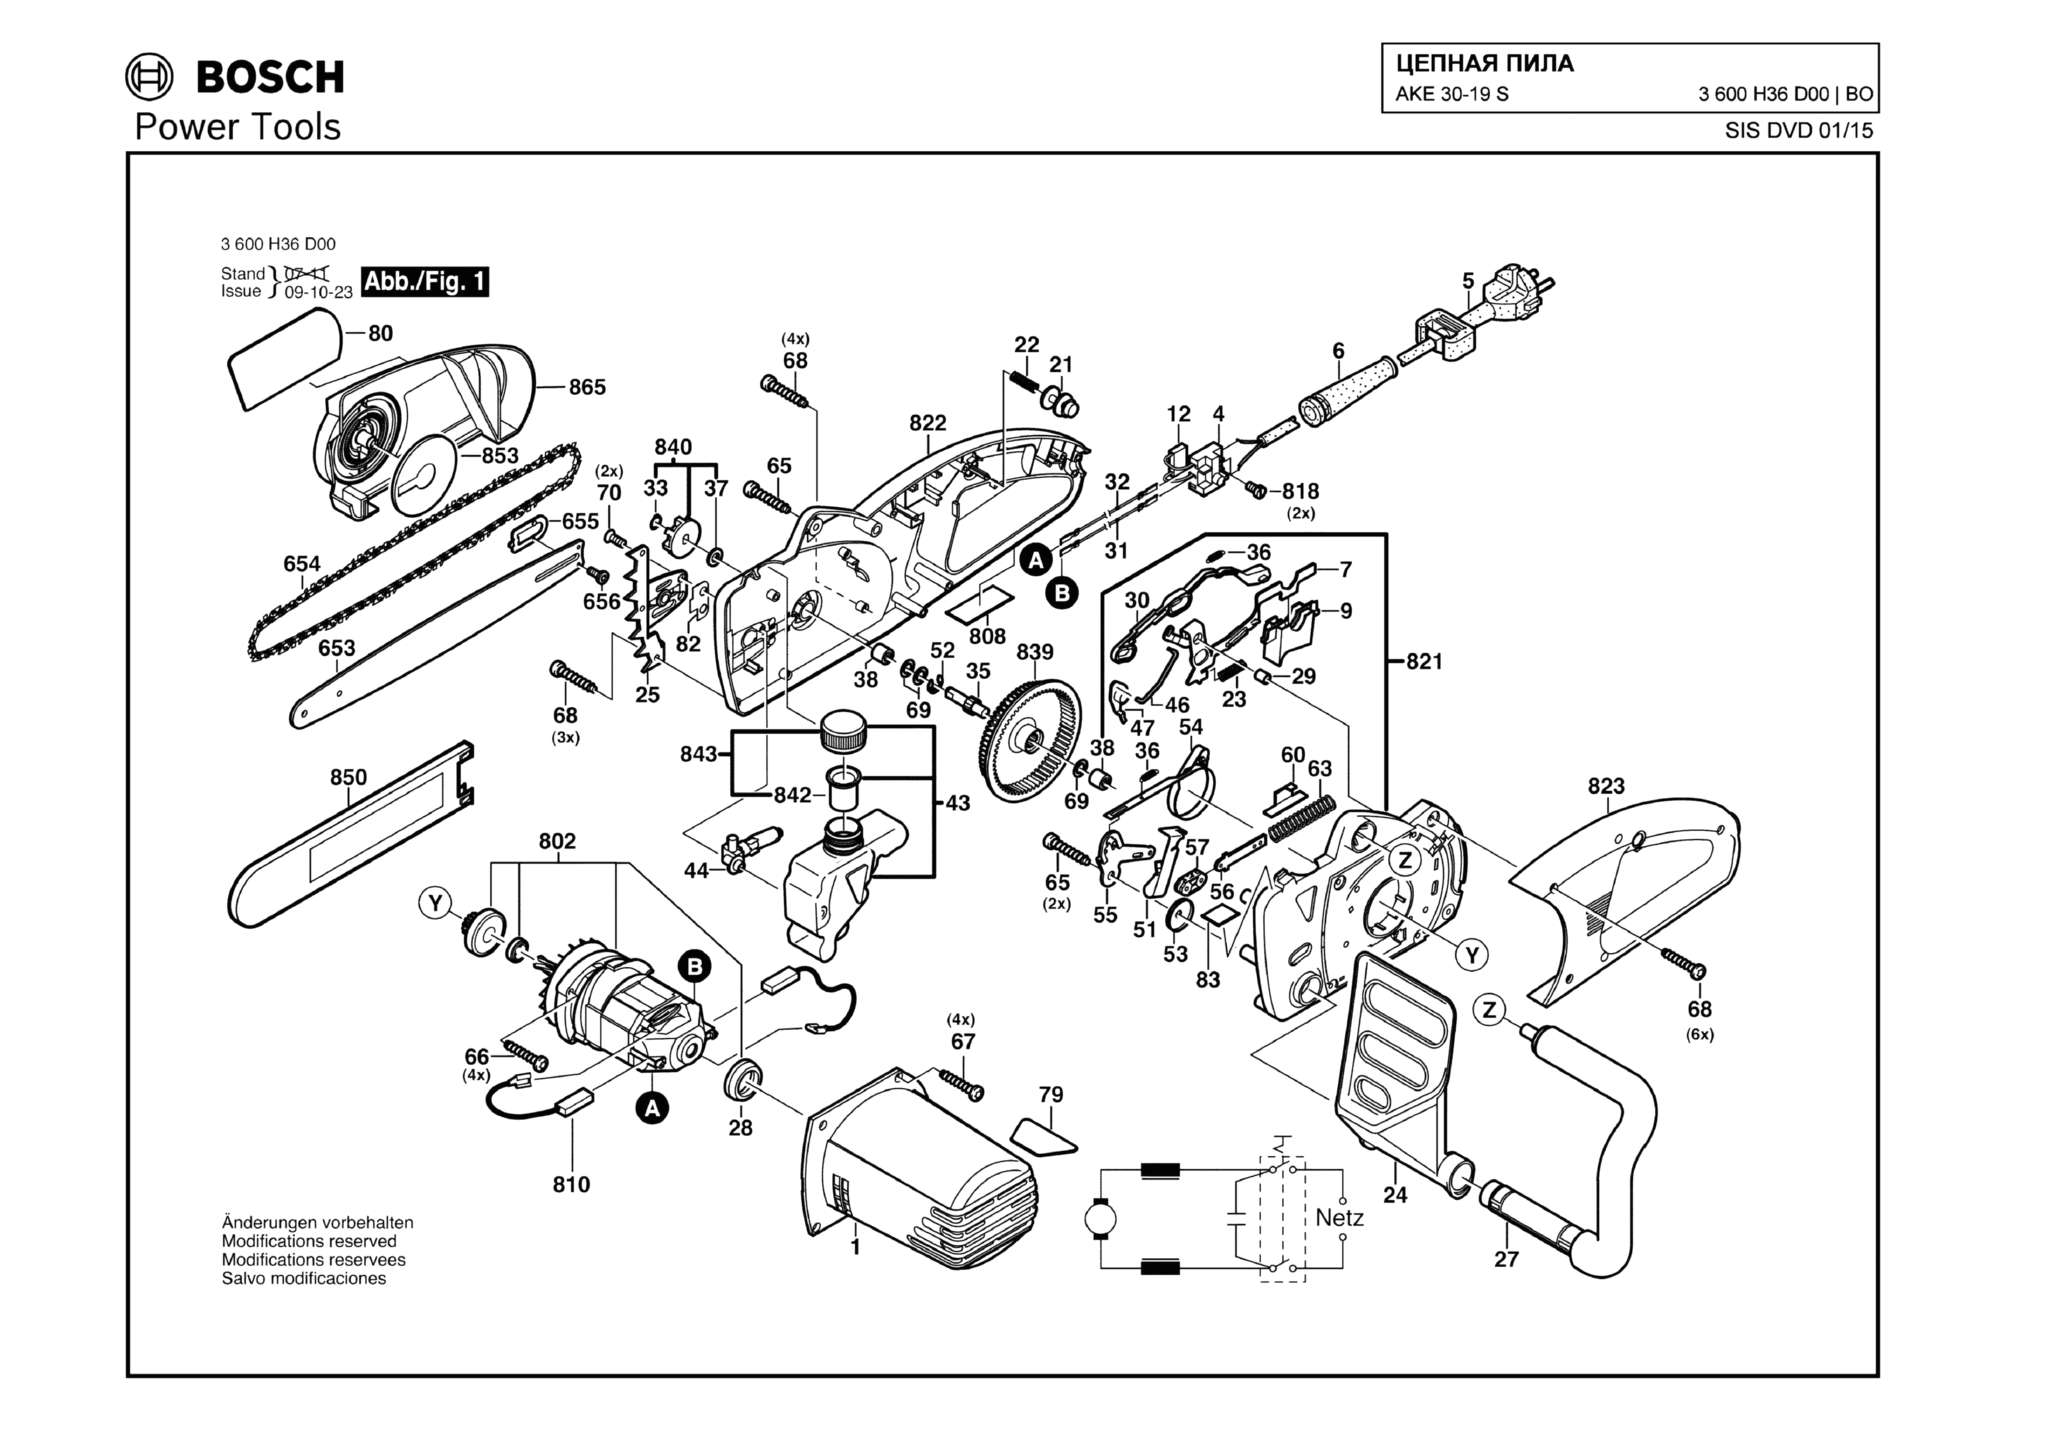 Запчасти, схема и деталировка Bosch AKE 30-19 S (ТИП 3600H36D00)